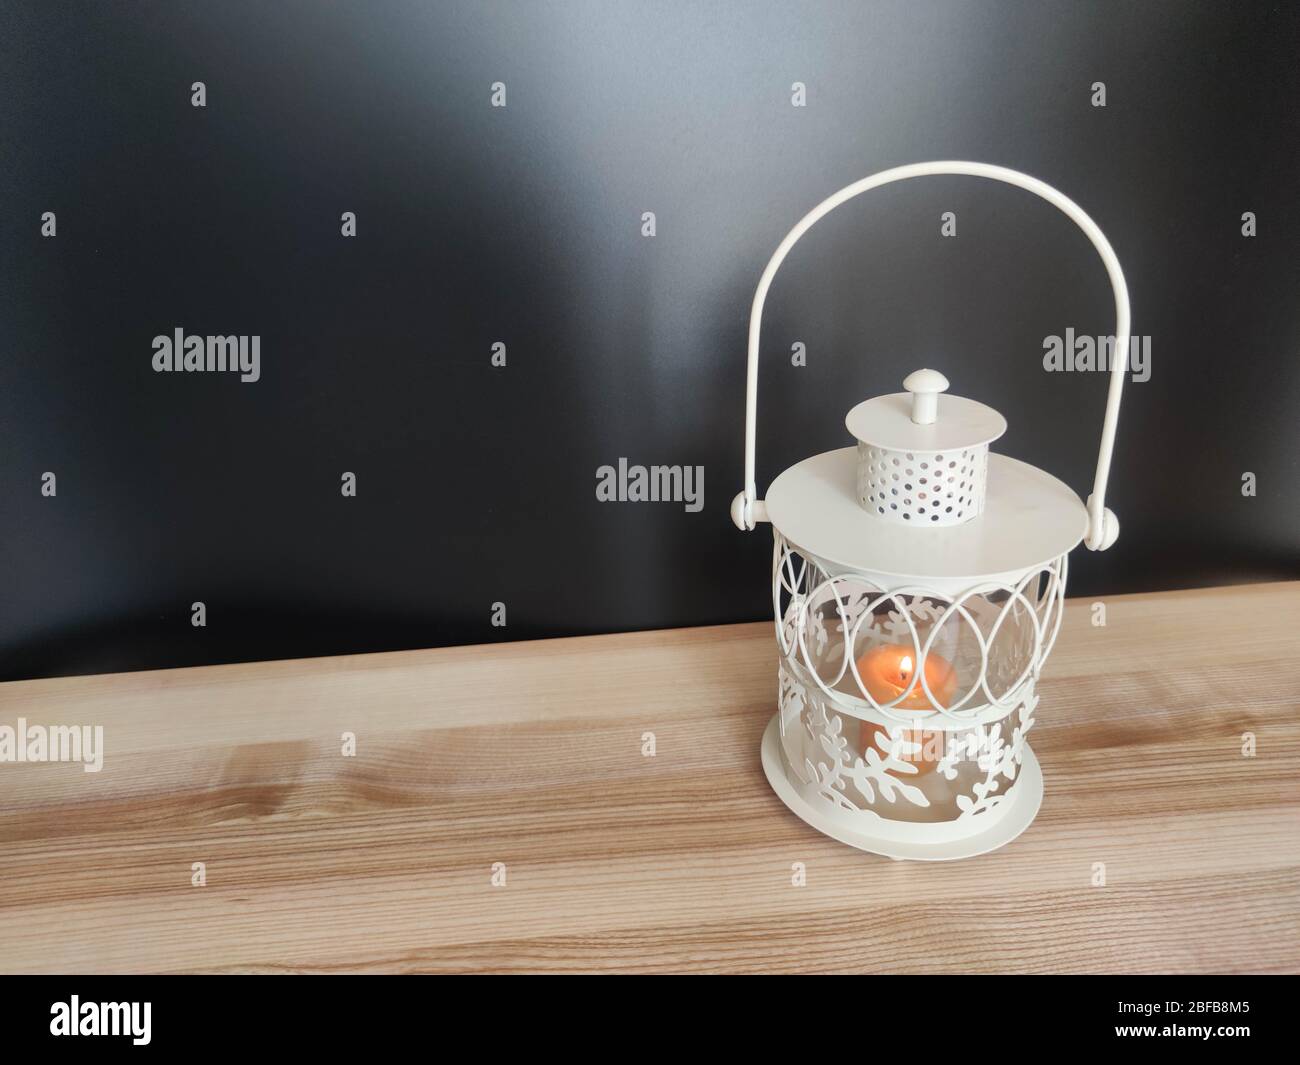 Vintage lantern with an orange candle on the table with black backdrop. Concept - Ramadan kareem holiday celebration. Royalty Free Stock photo Stock Photo